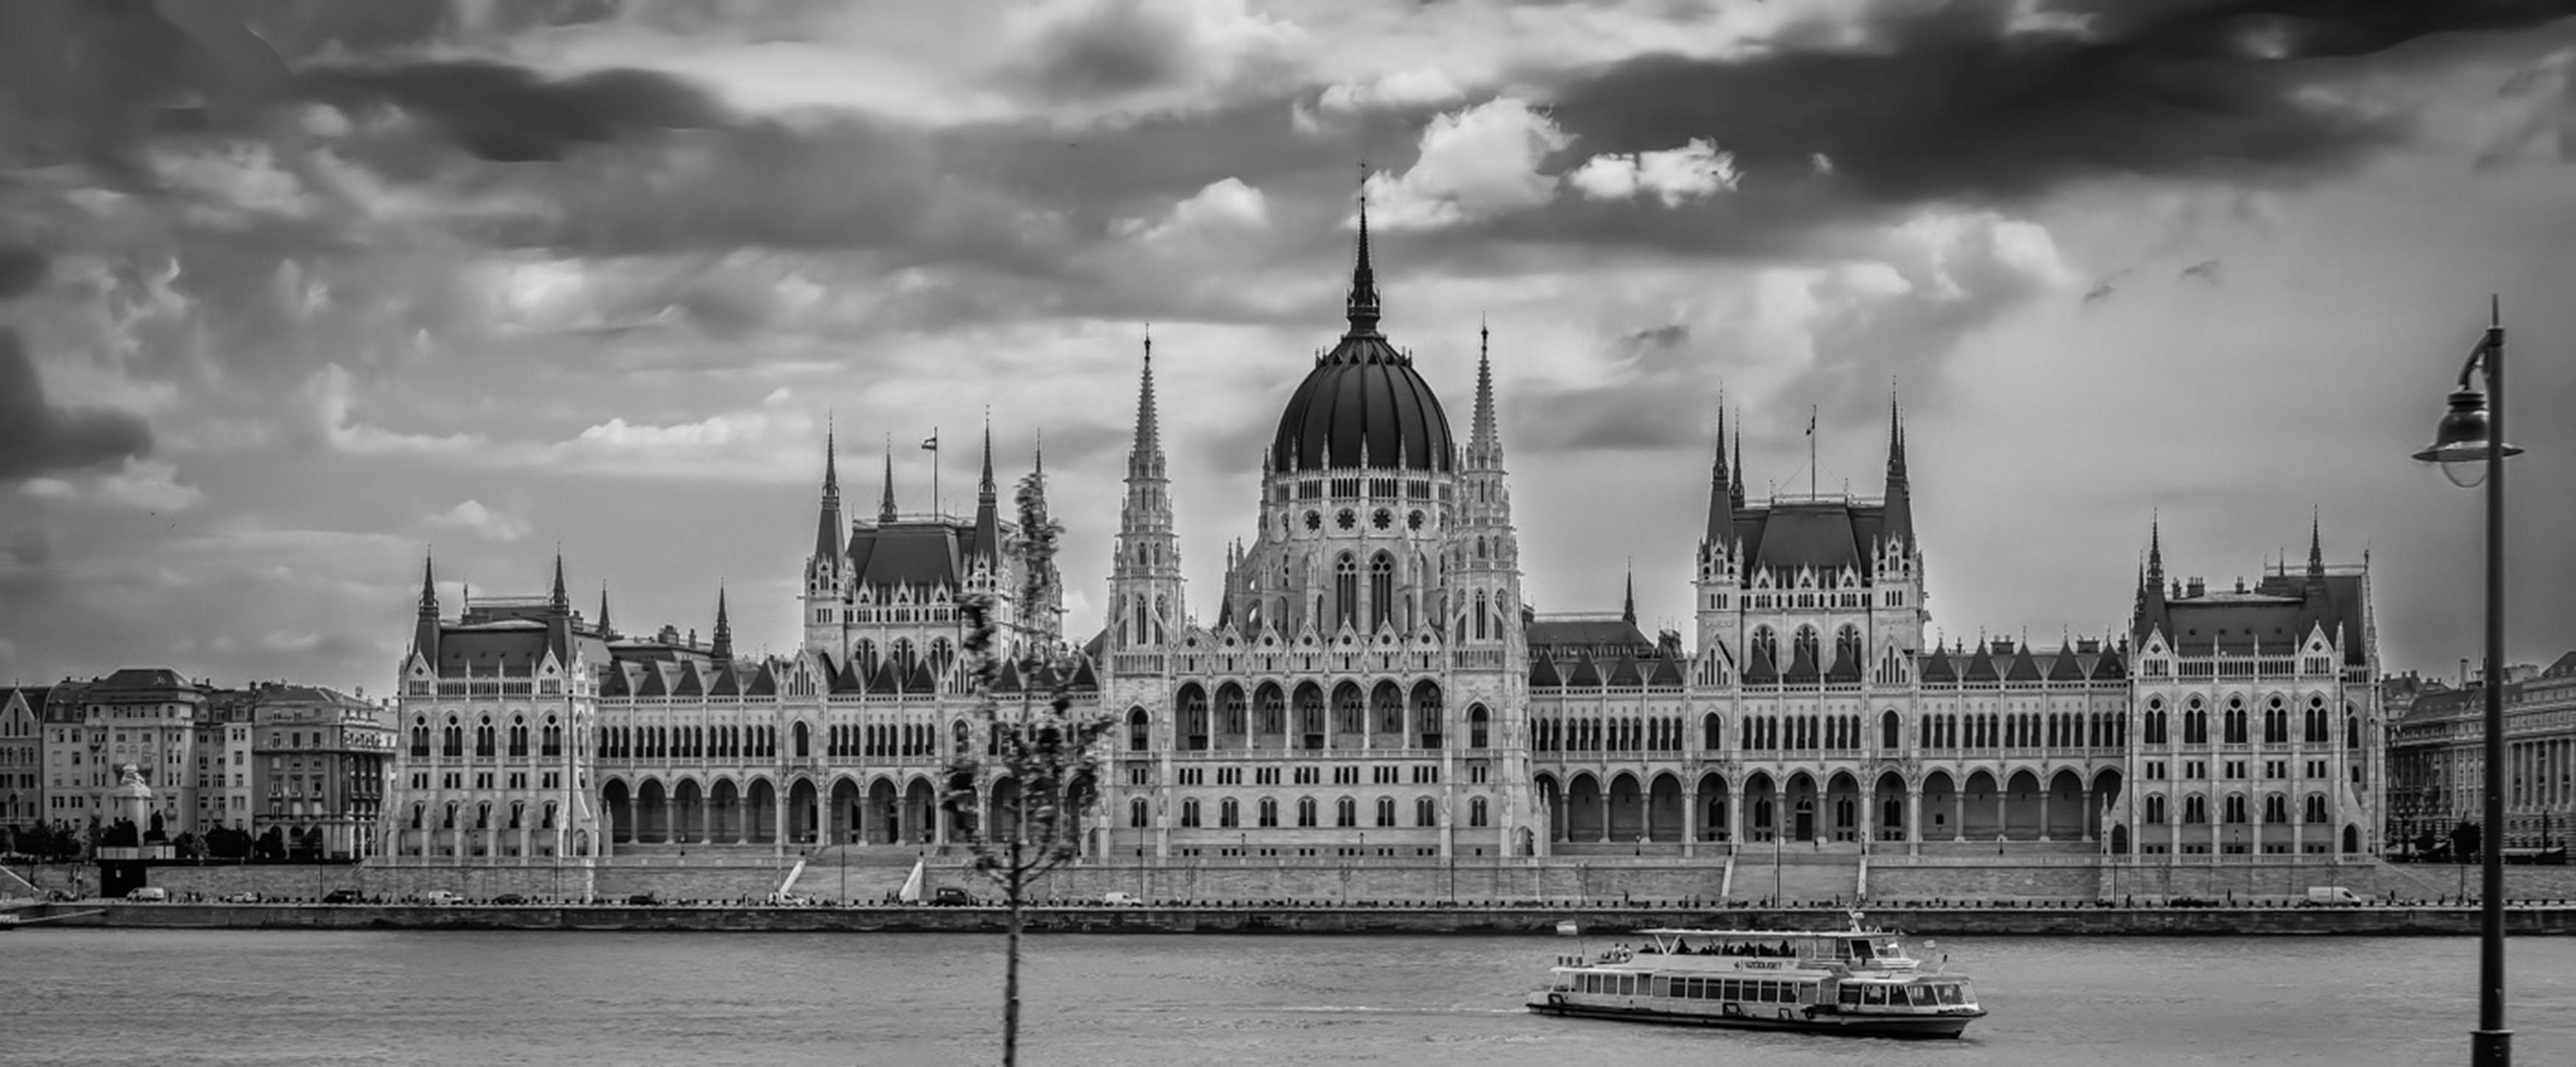 Hungarian Parliament Building by Jim Bodkin, APSA, PPSA